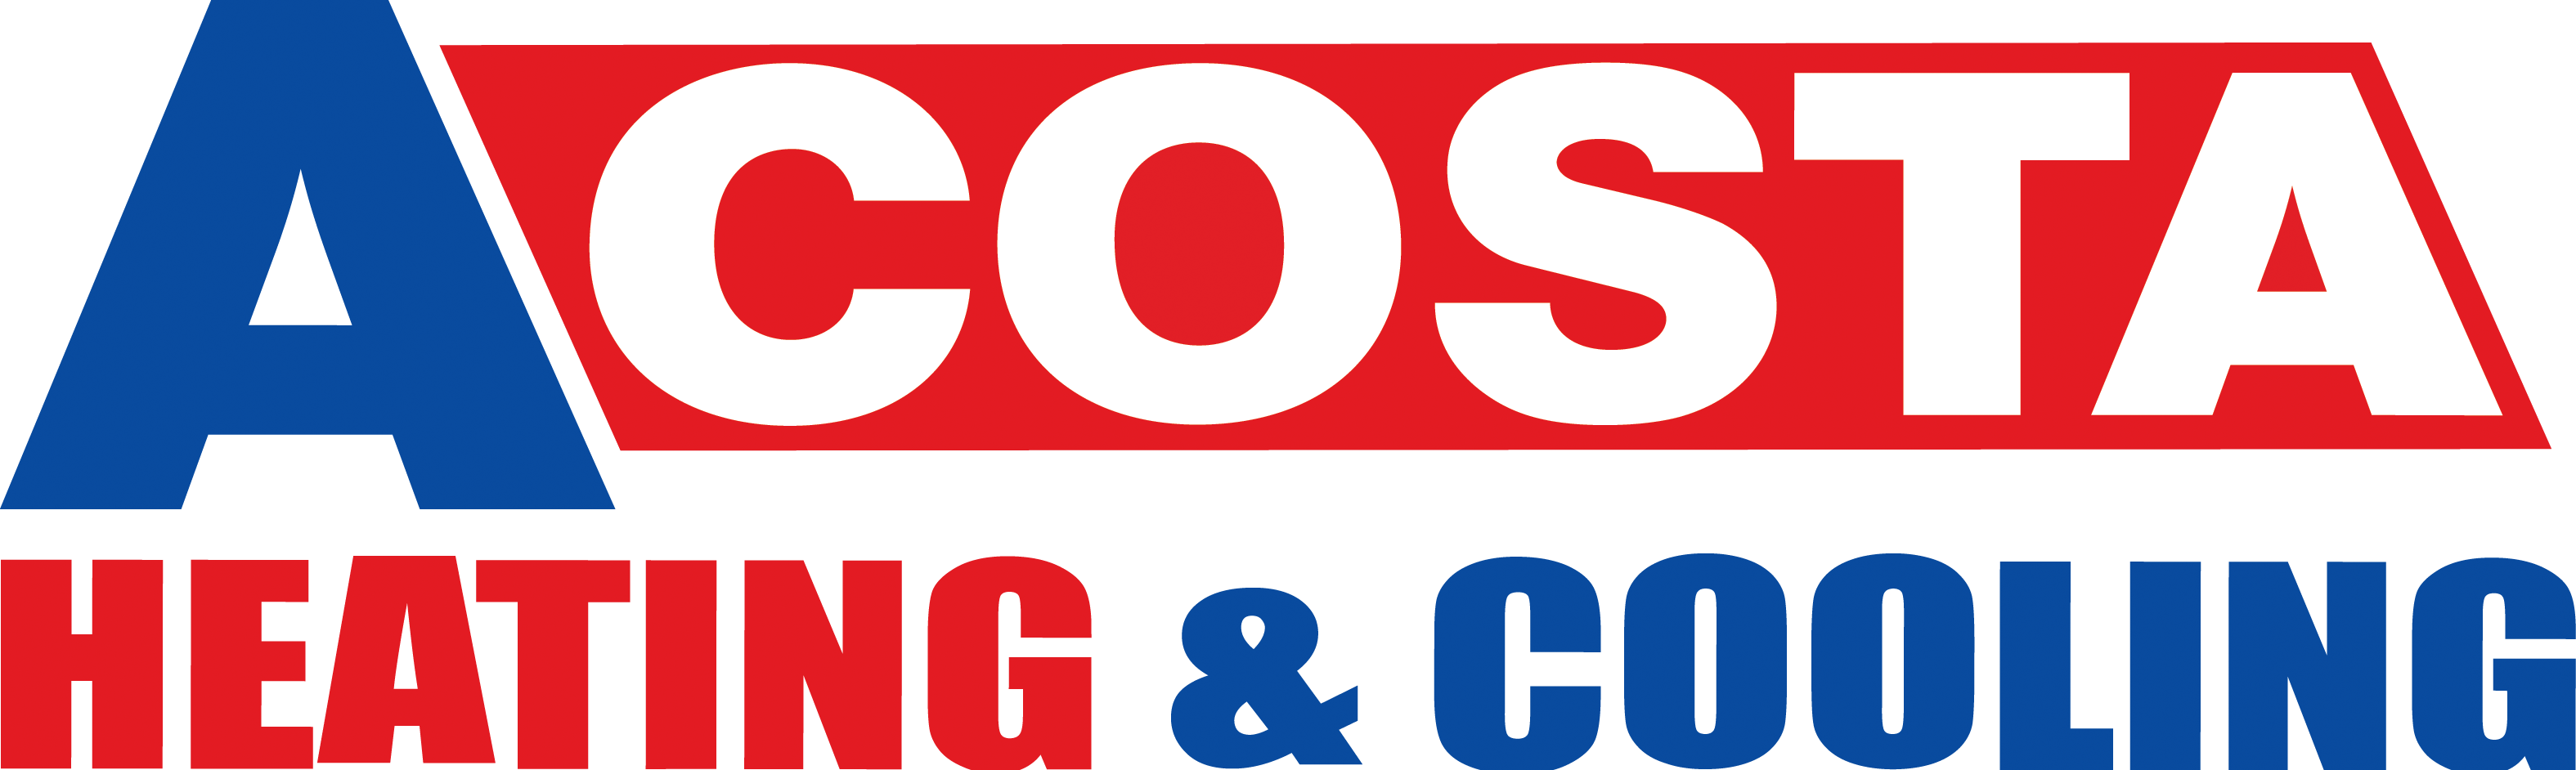 Acosta Logo - Acosta Logo – The Golf Shop Show